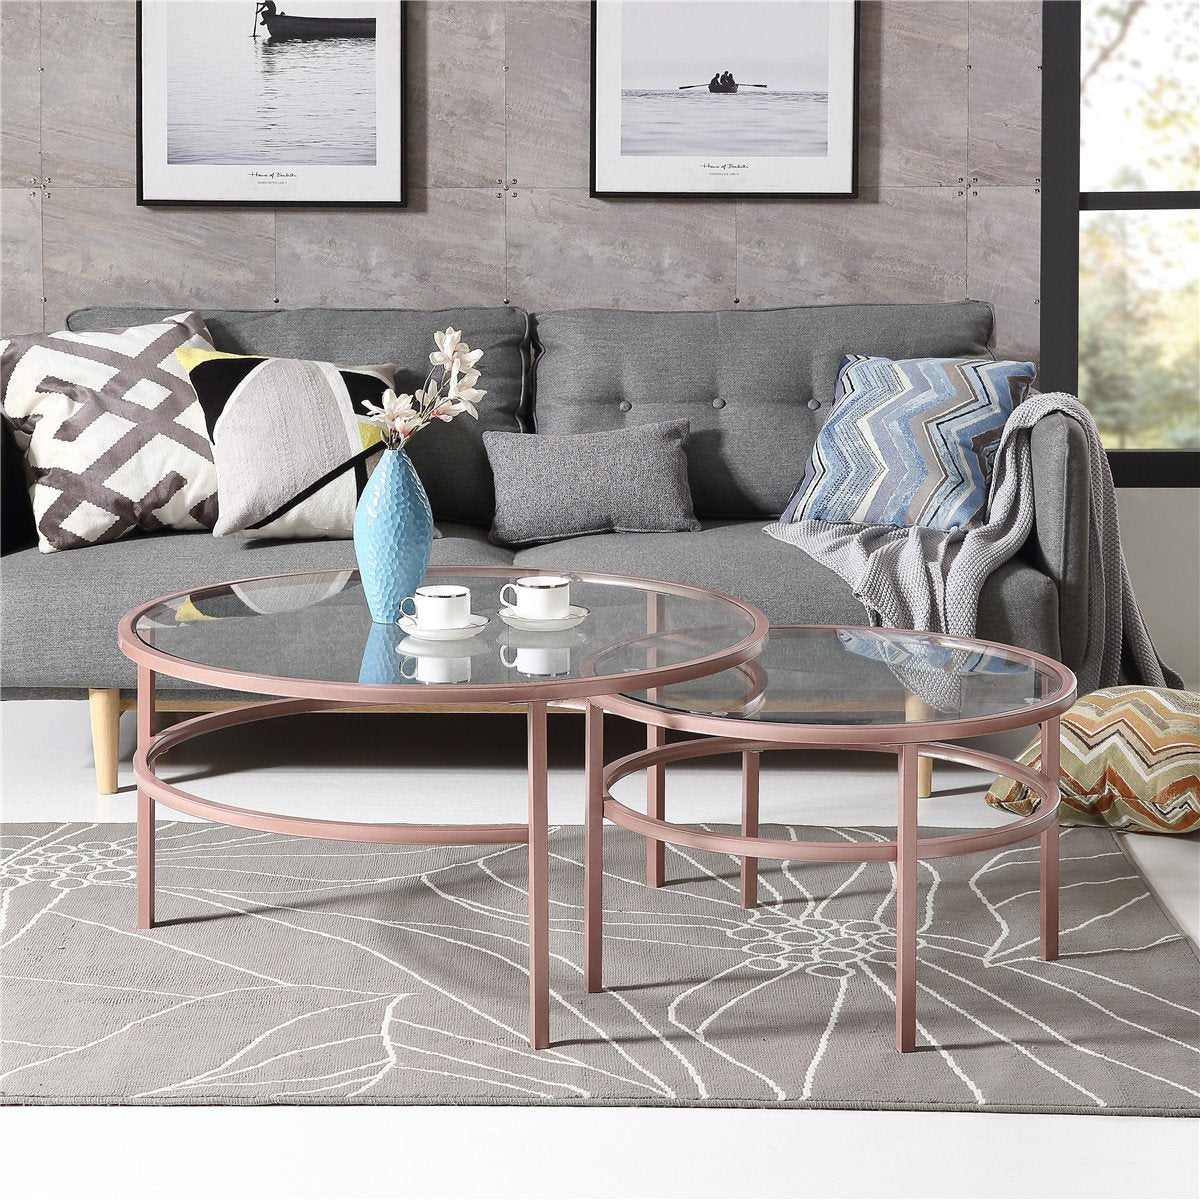 Crest Nesting Round 2 Piece Coffee Table Set | Elegant mid-century modern design | Glass